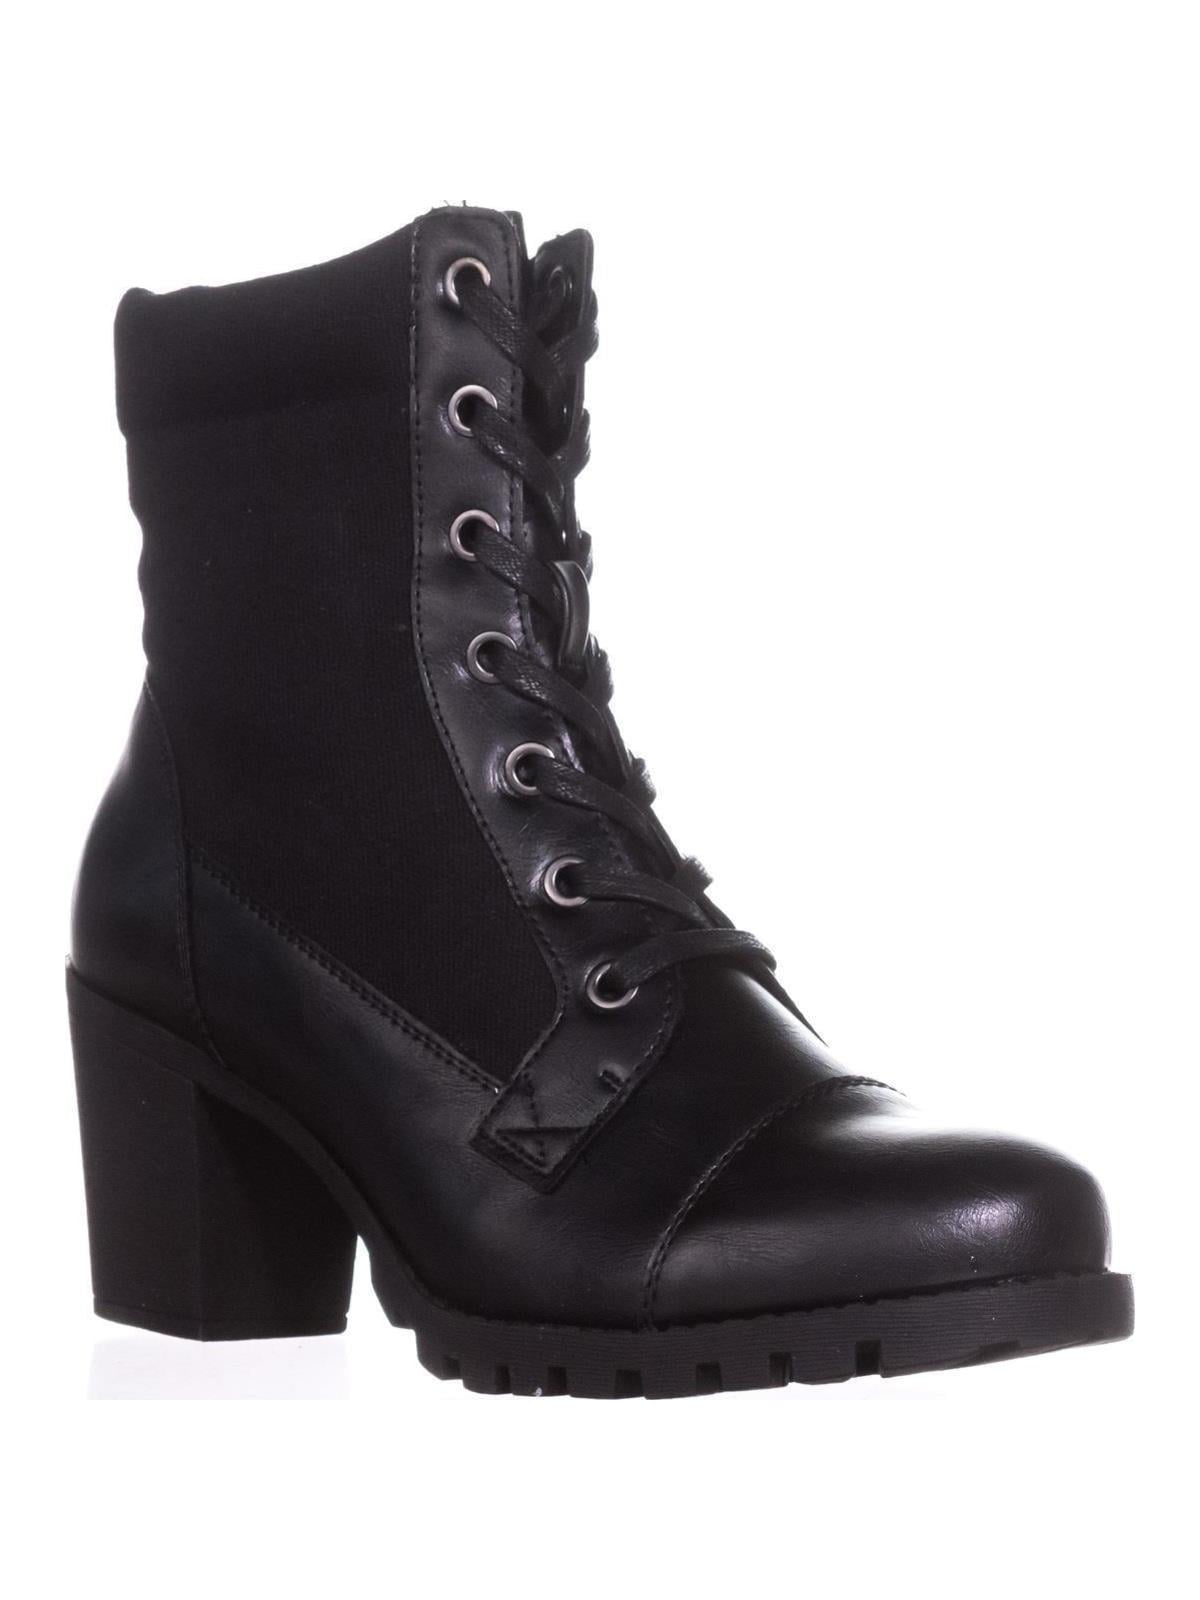 Womens XOXO Carley Heeled Combat Boots, Black, 7 US - Walmart.com